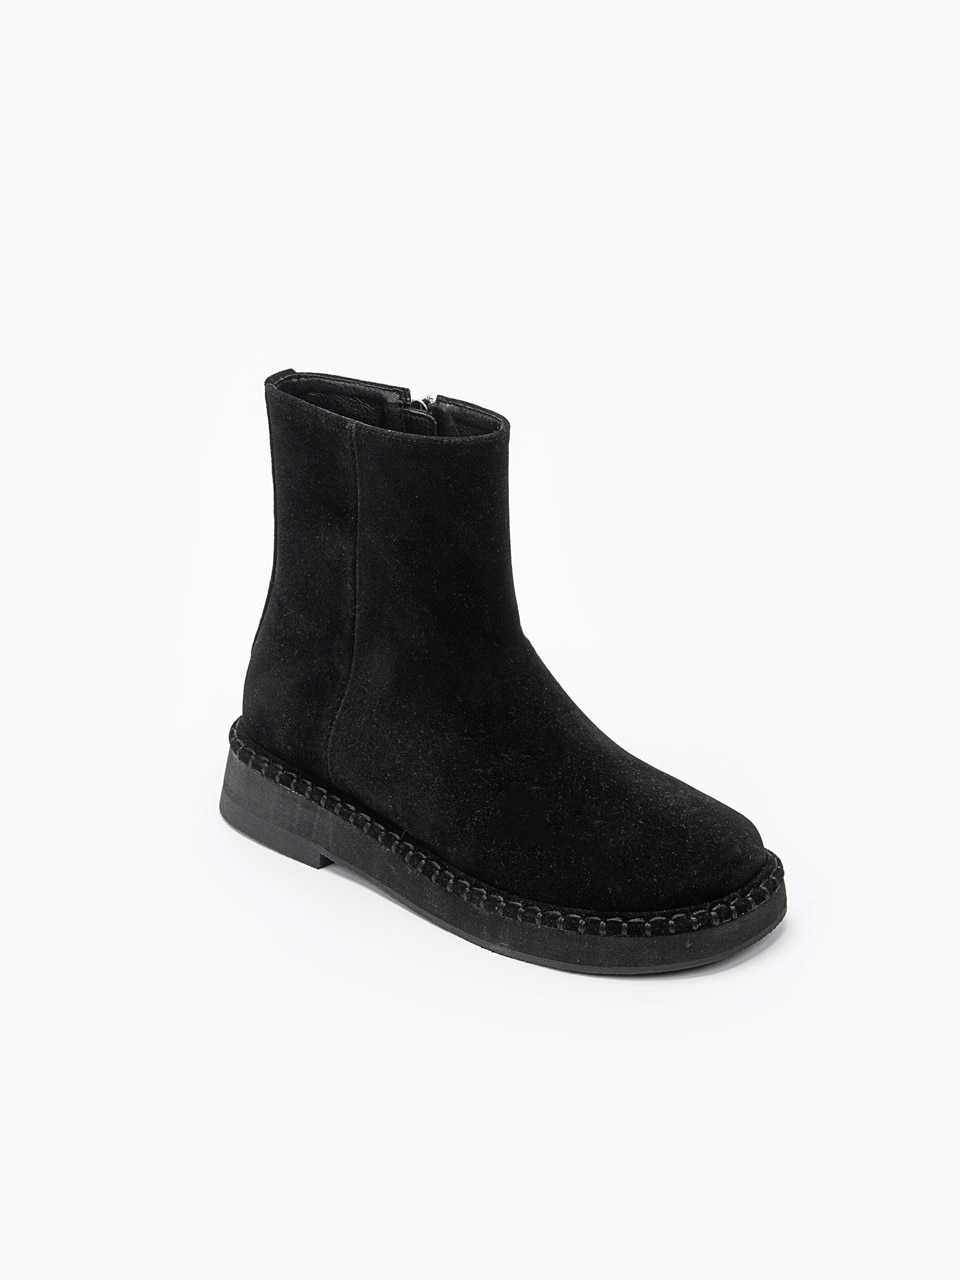 Mogul ankle boots (Black)